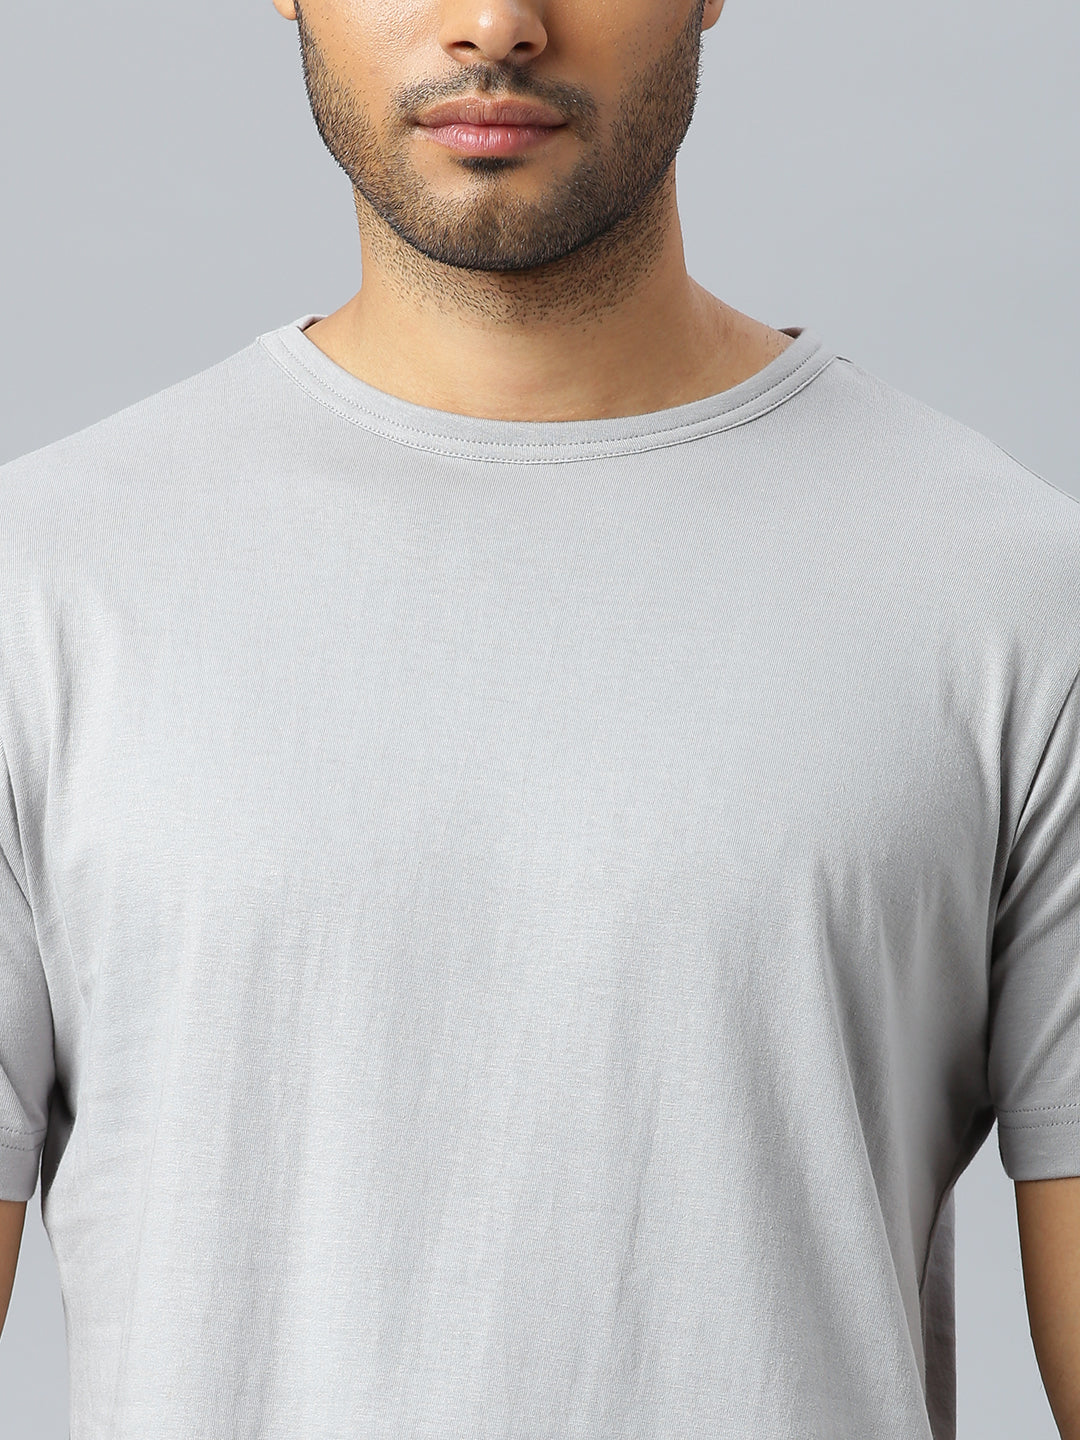 Don Vino Men's Grey Solid Crew Neck T-Shirt